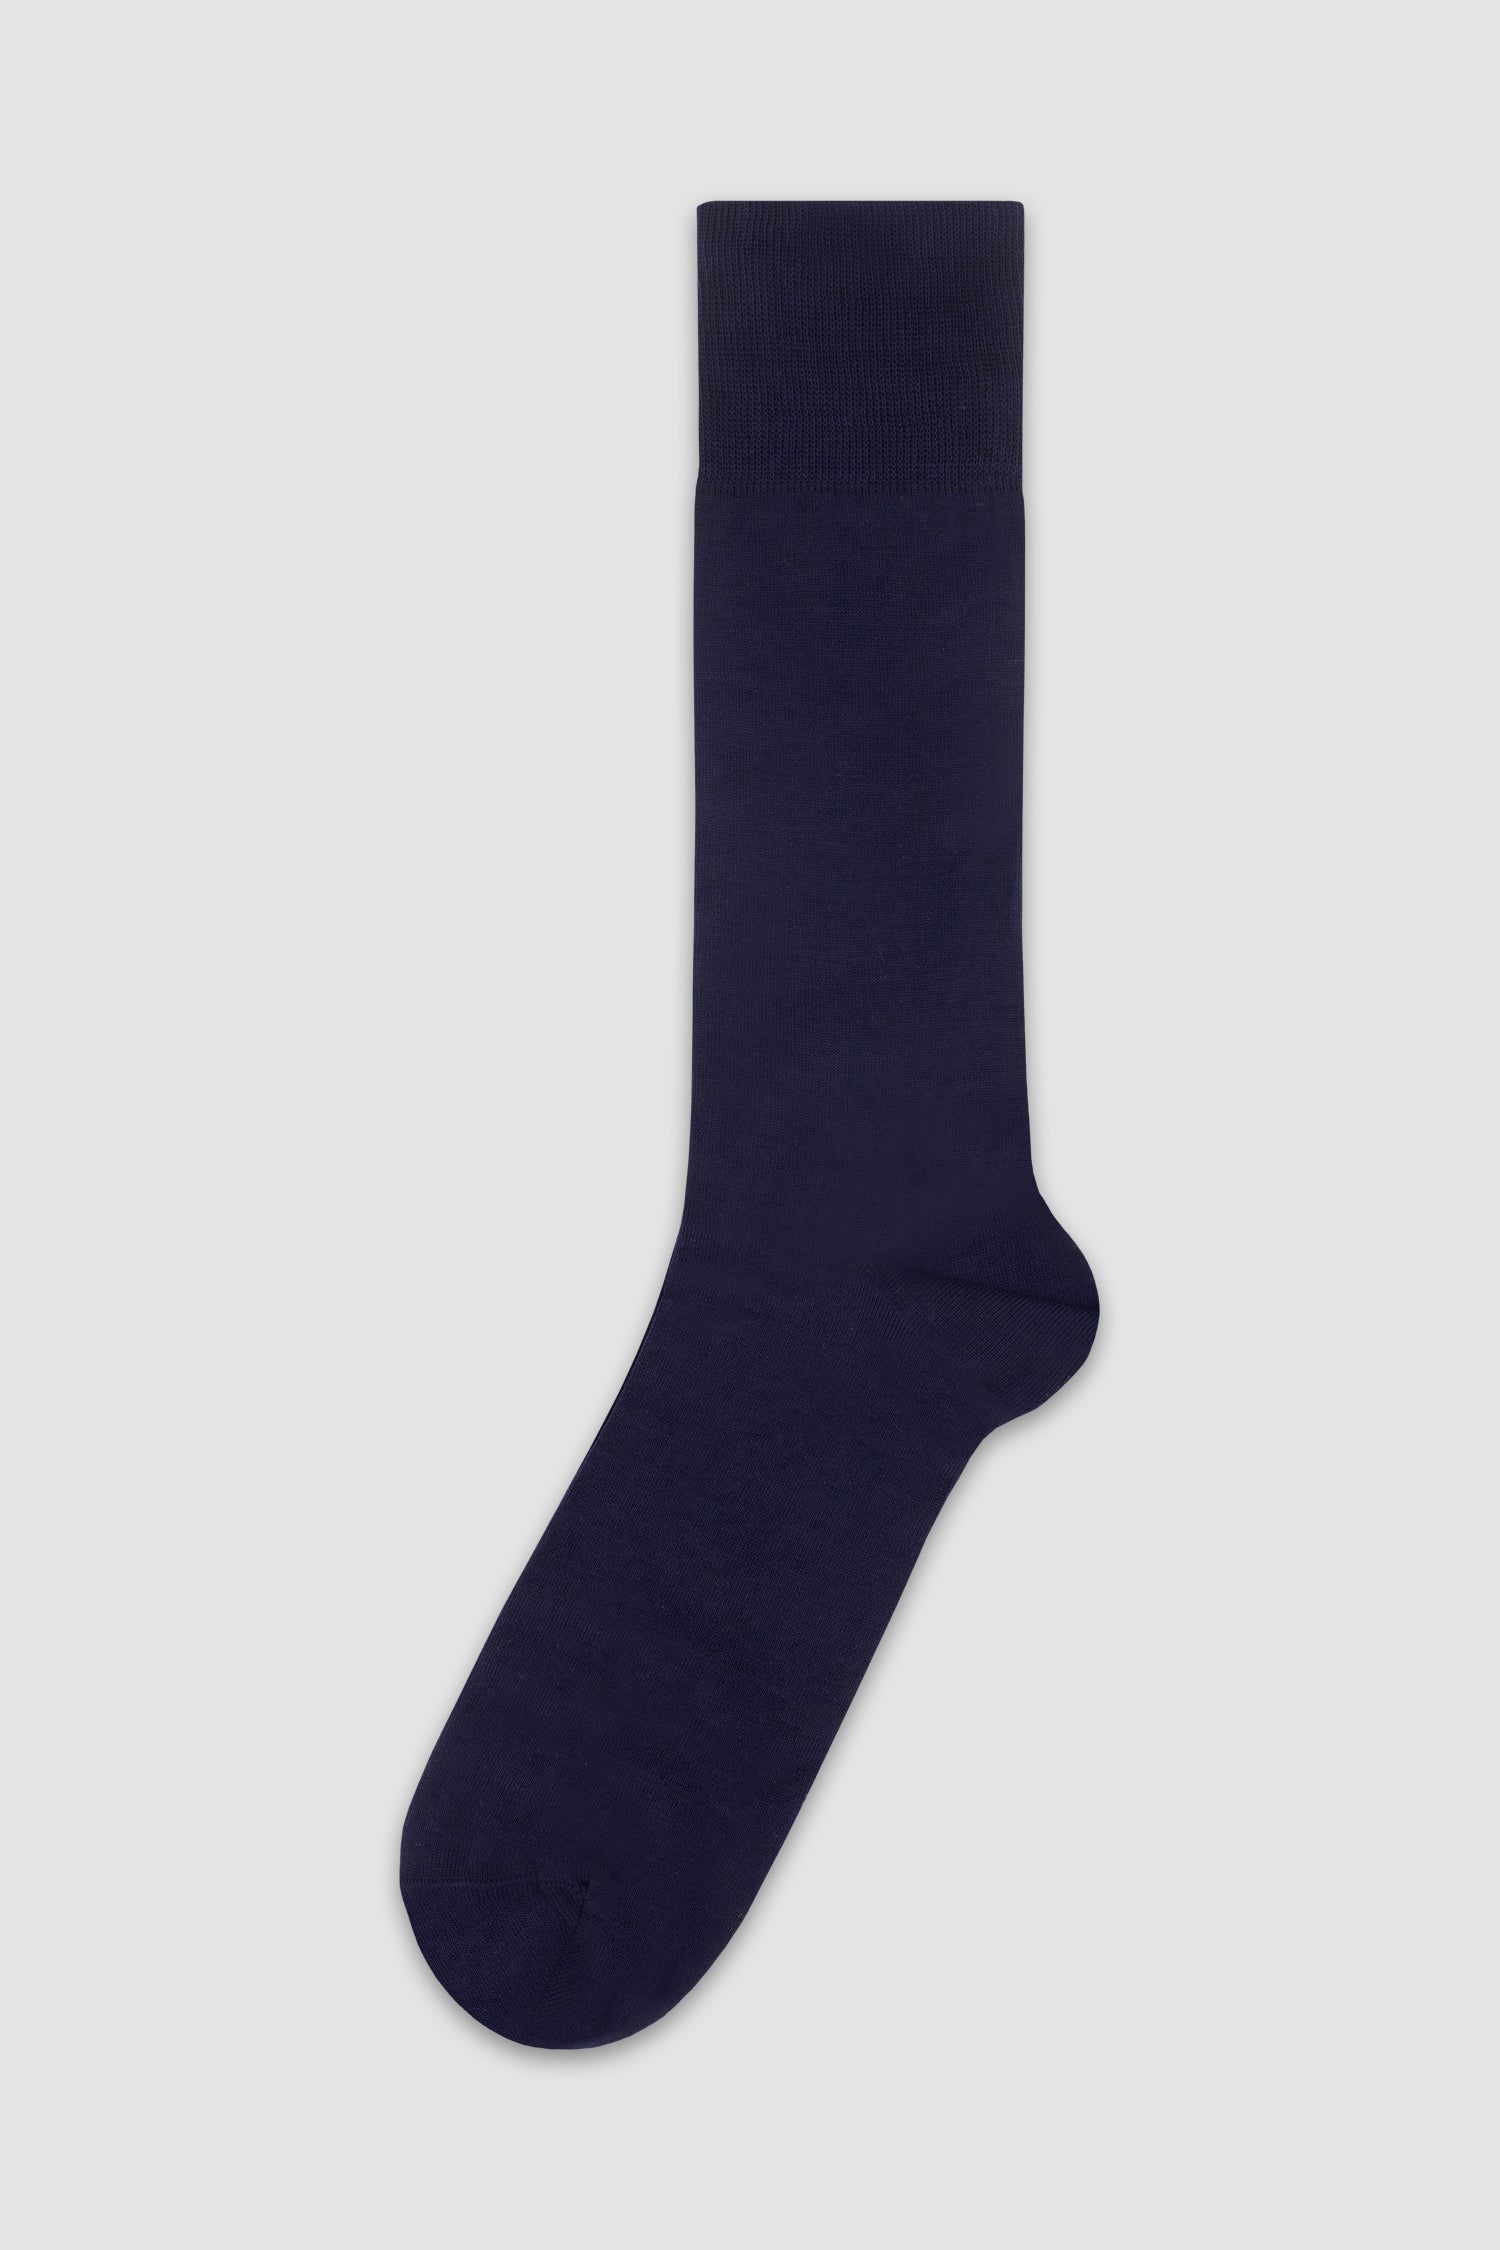 Nobile Solid Blue Crew Socks